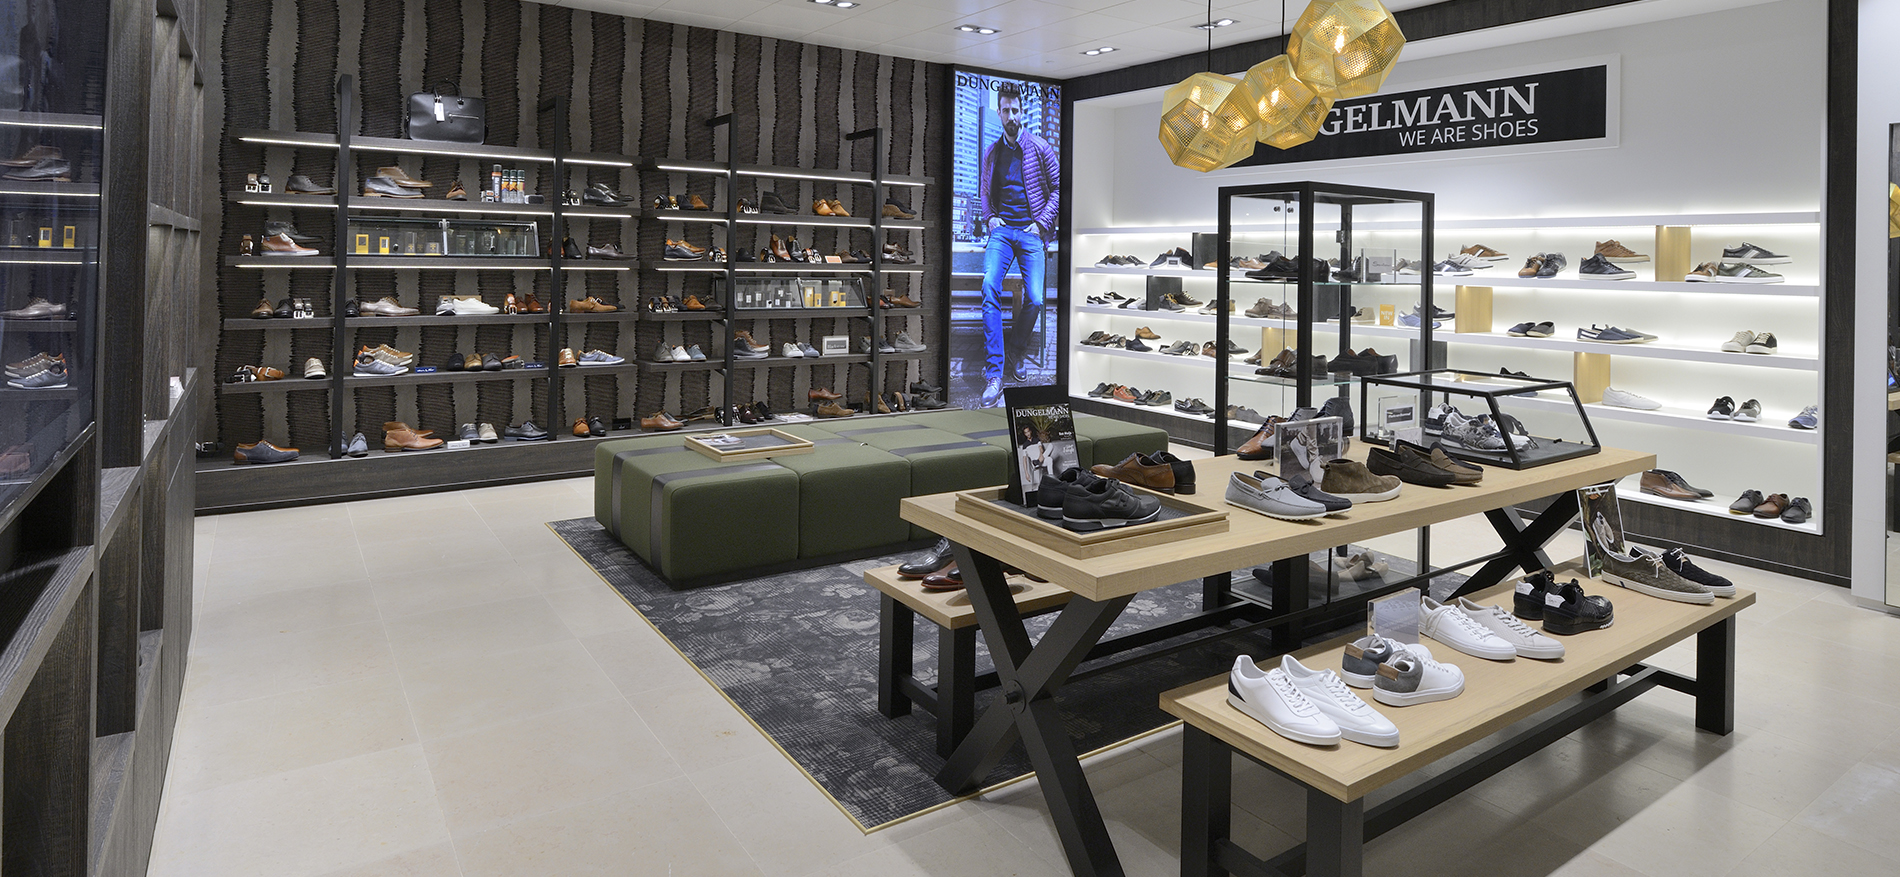 Shop-in-shop Dungelmann Chaussures dans Berden Mode à Uden - 